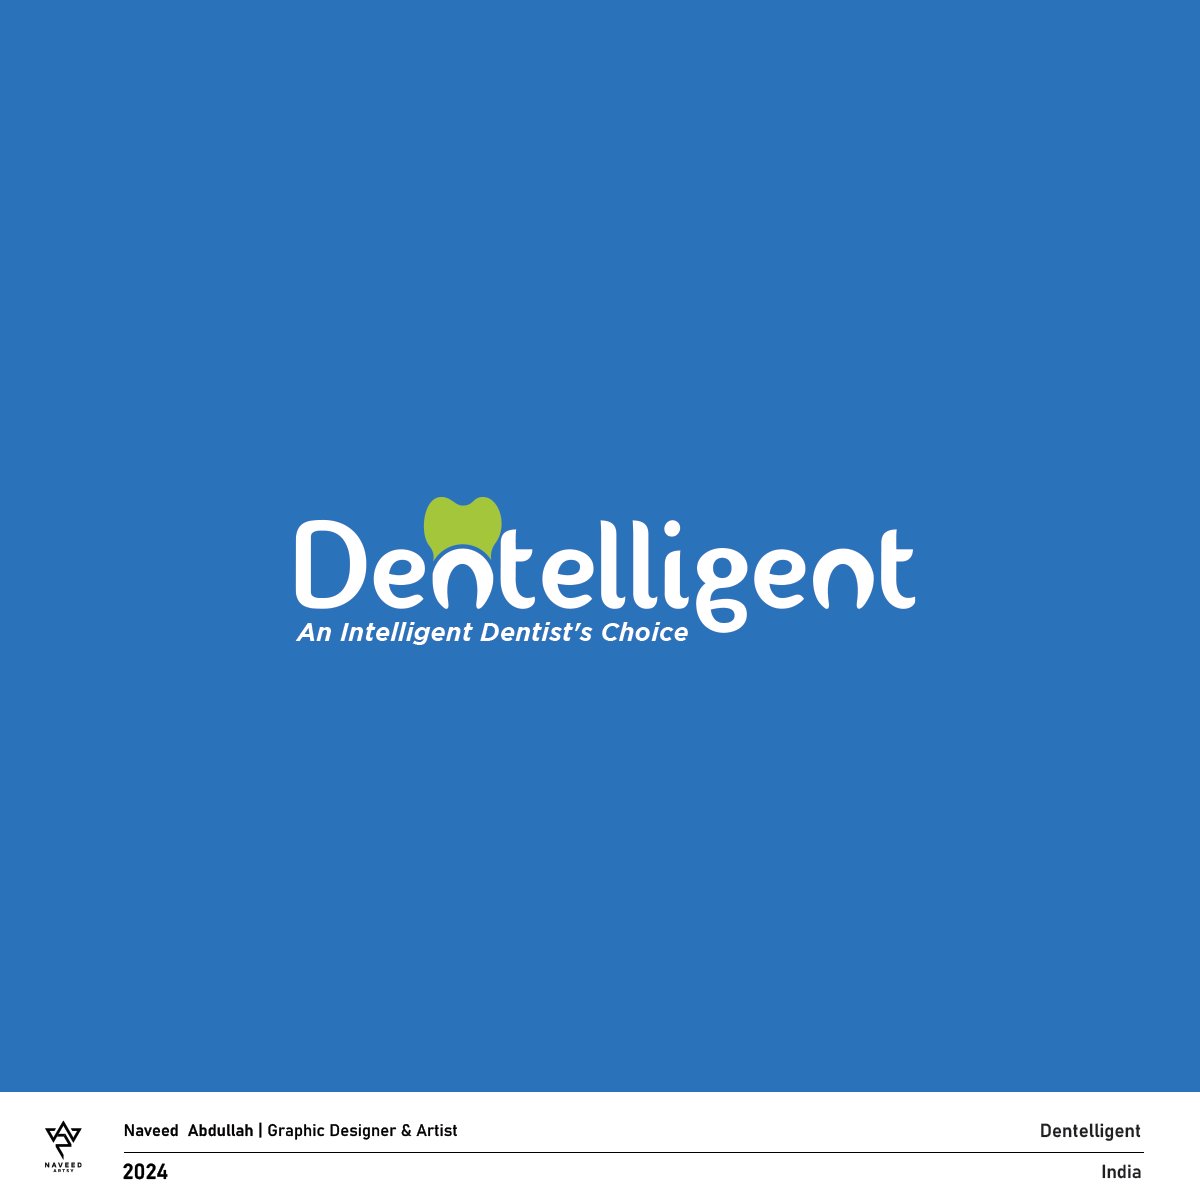 Dentelligent | An Intelligent Dentist's Choice 
Logo Design , DM to get yours 
.
#logodesign #logodesigner #logo #logotype #logochallenge #logomaker #logoinspiration